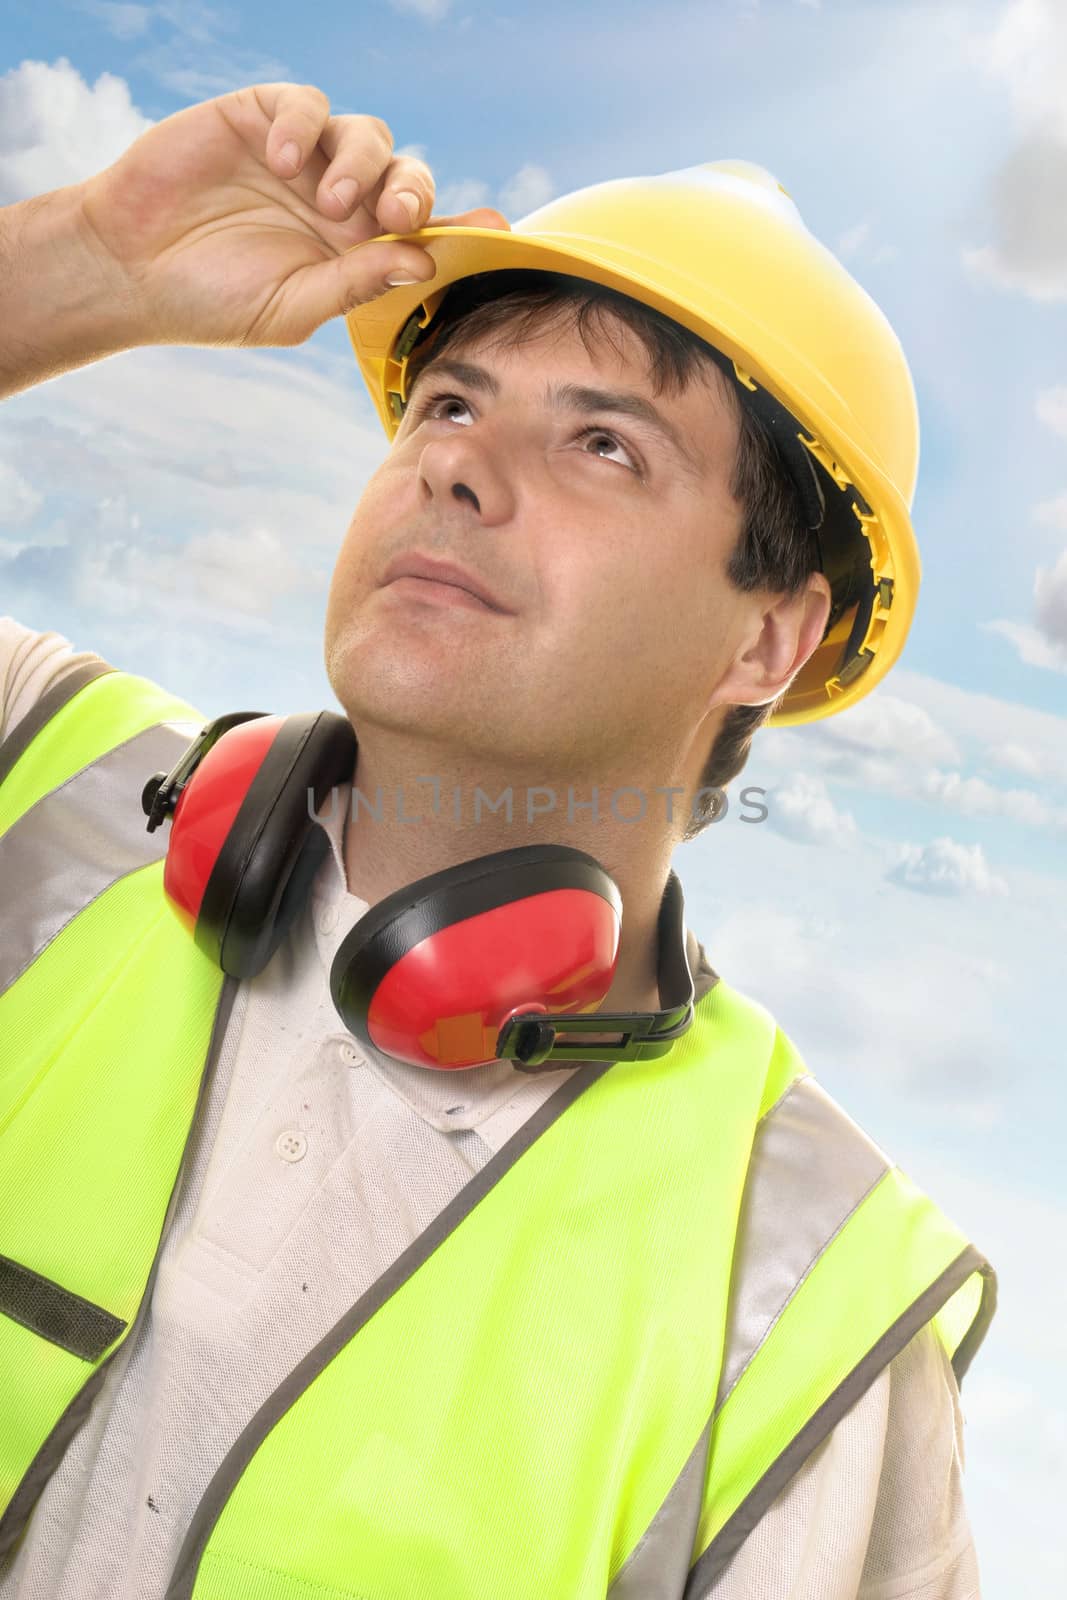 Engineer or builder looking up at progress by lovleah